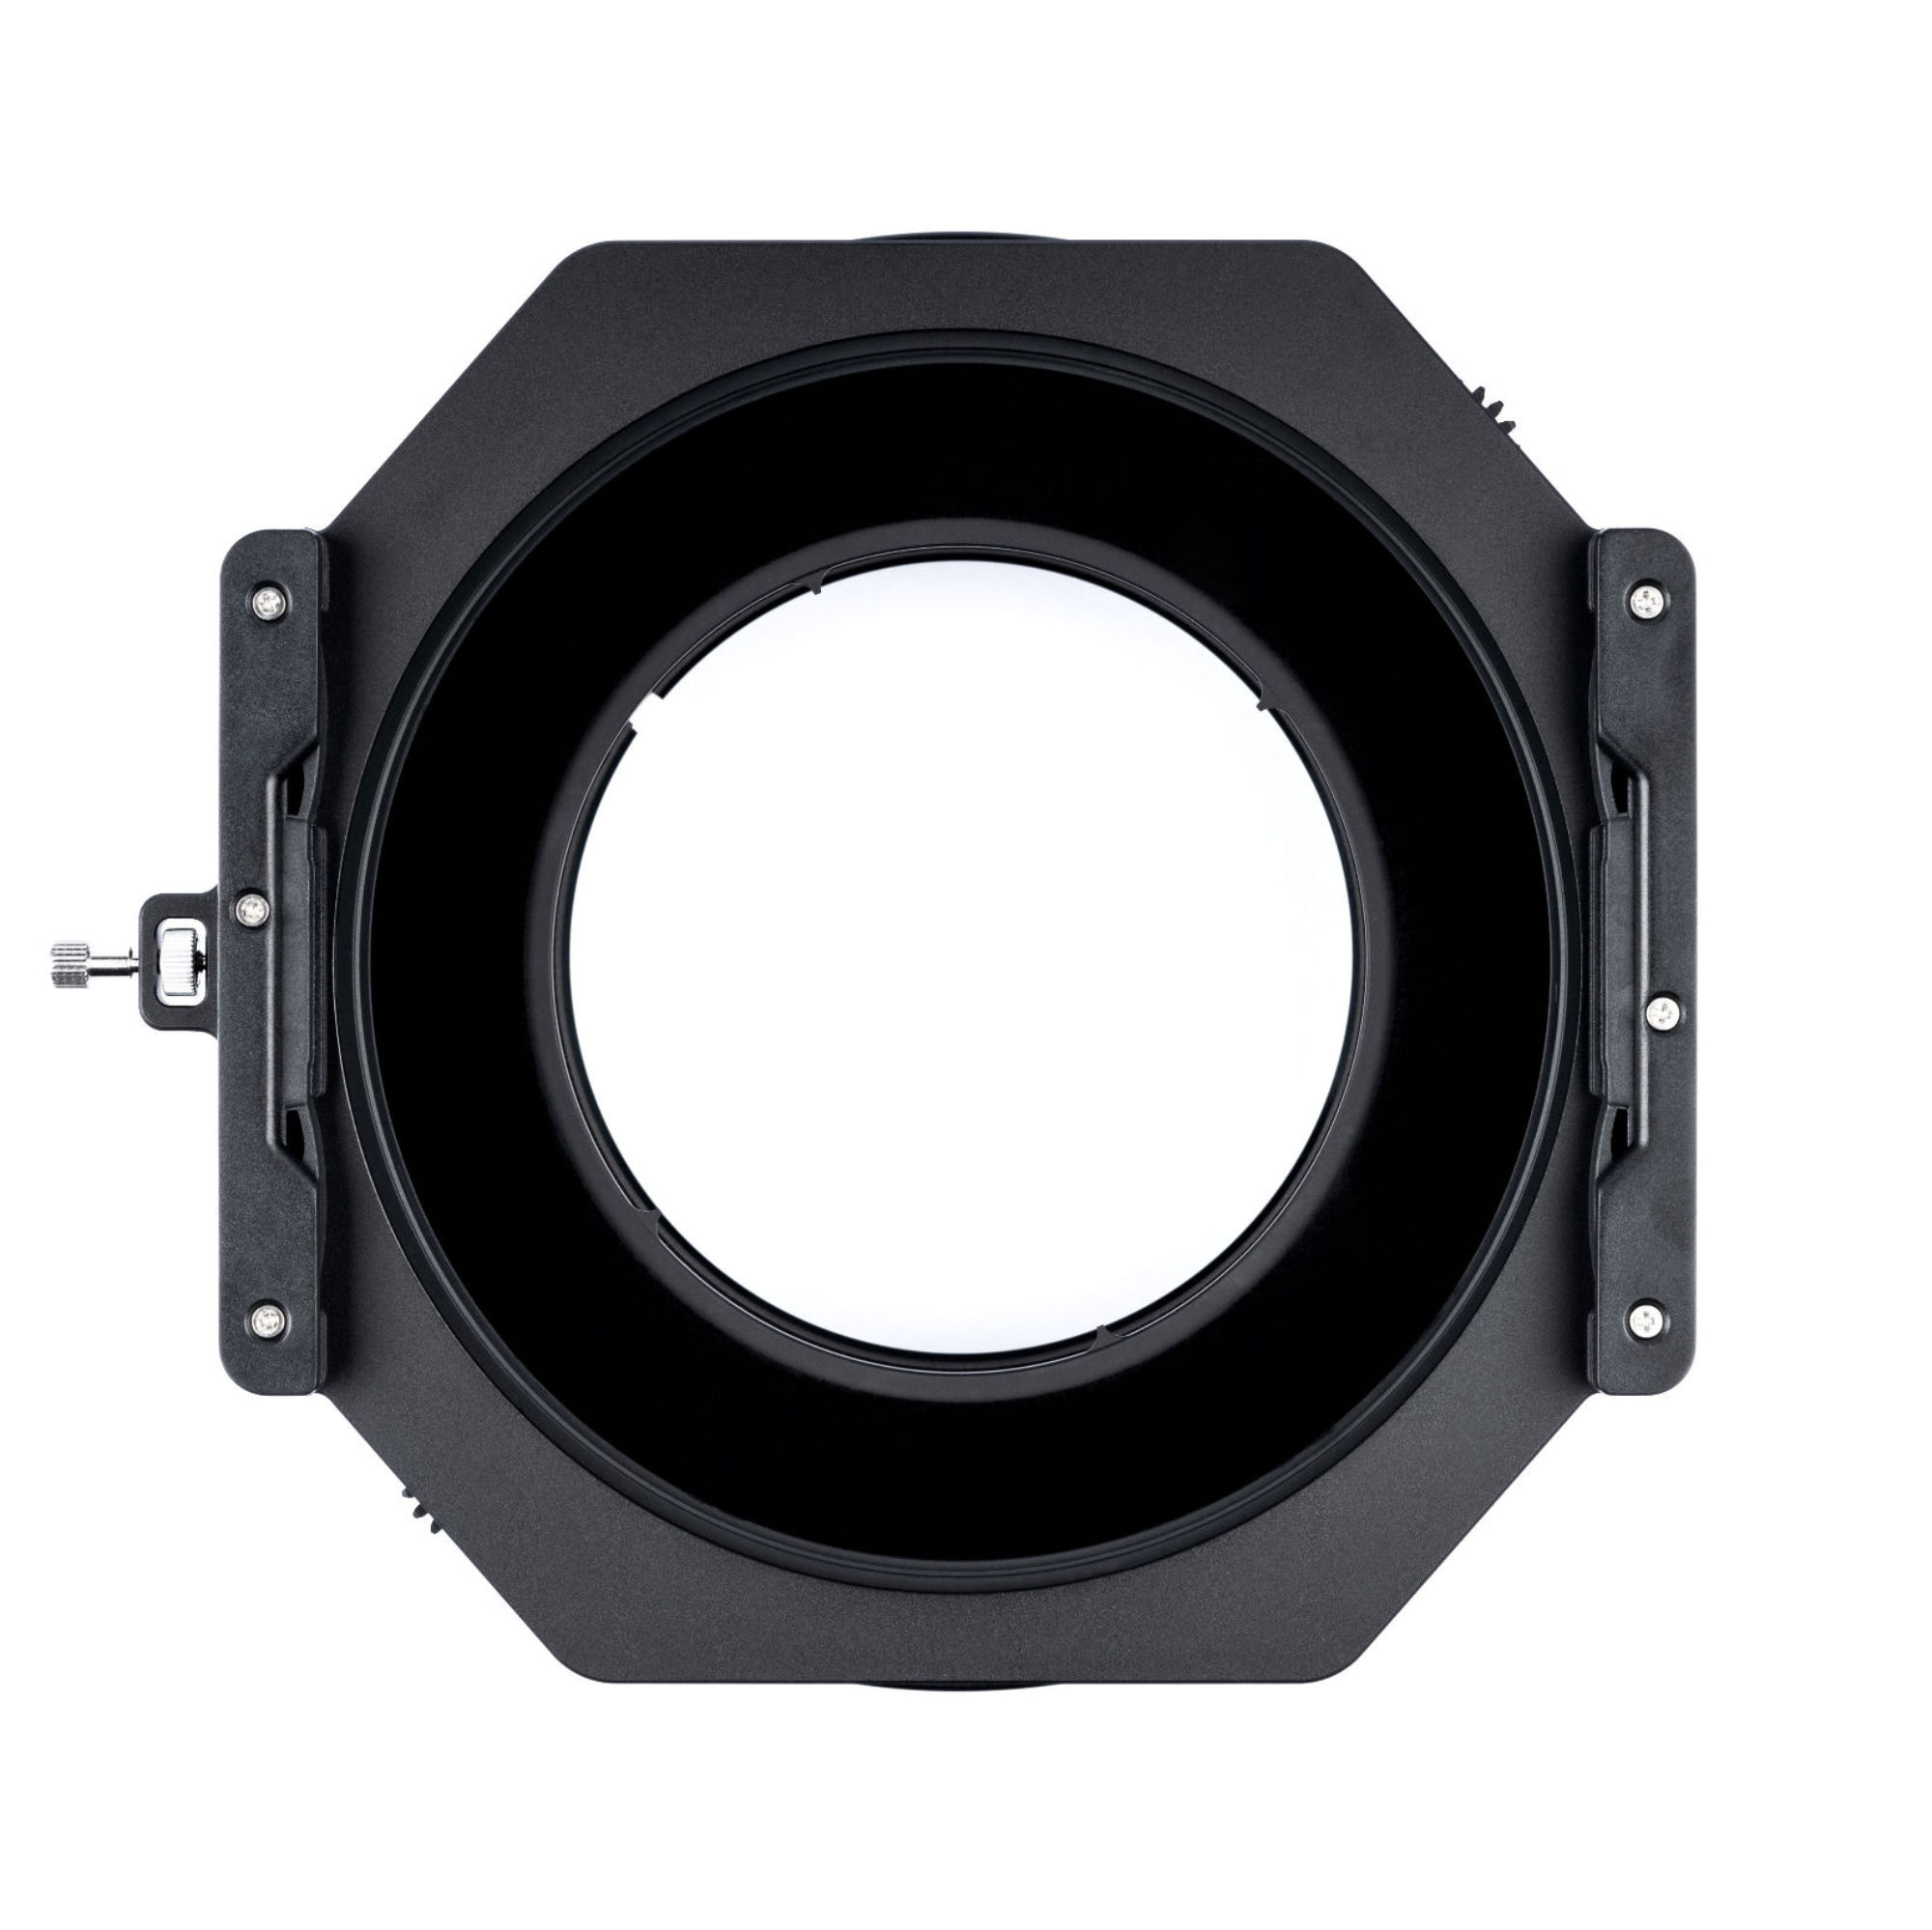 NiSi S6 ALPHA 150mm Filter Holder and Case for Tamron SP 15-30mm f/2.8 G2